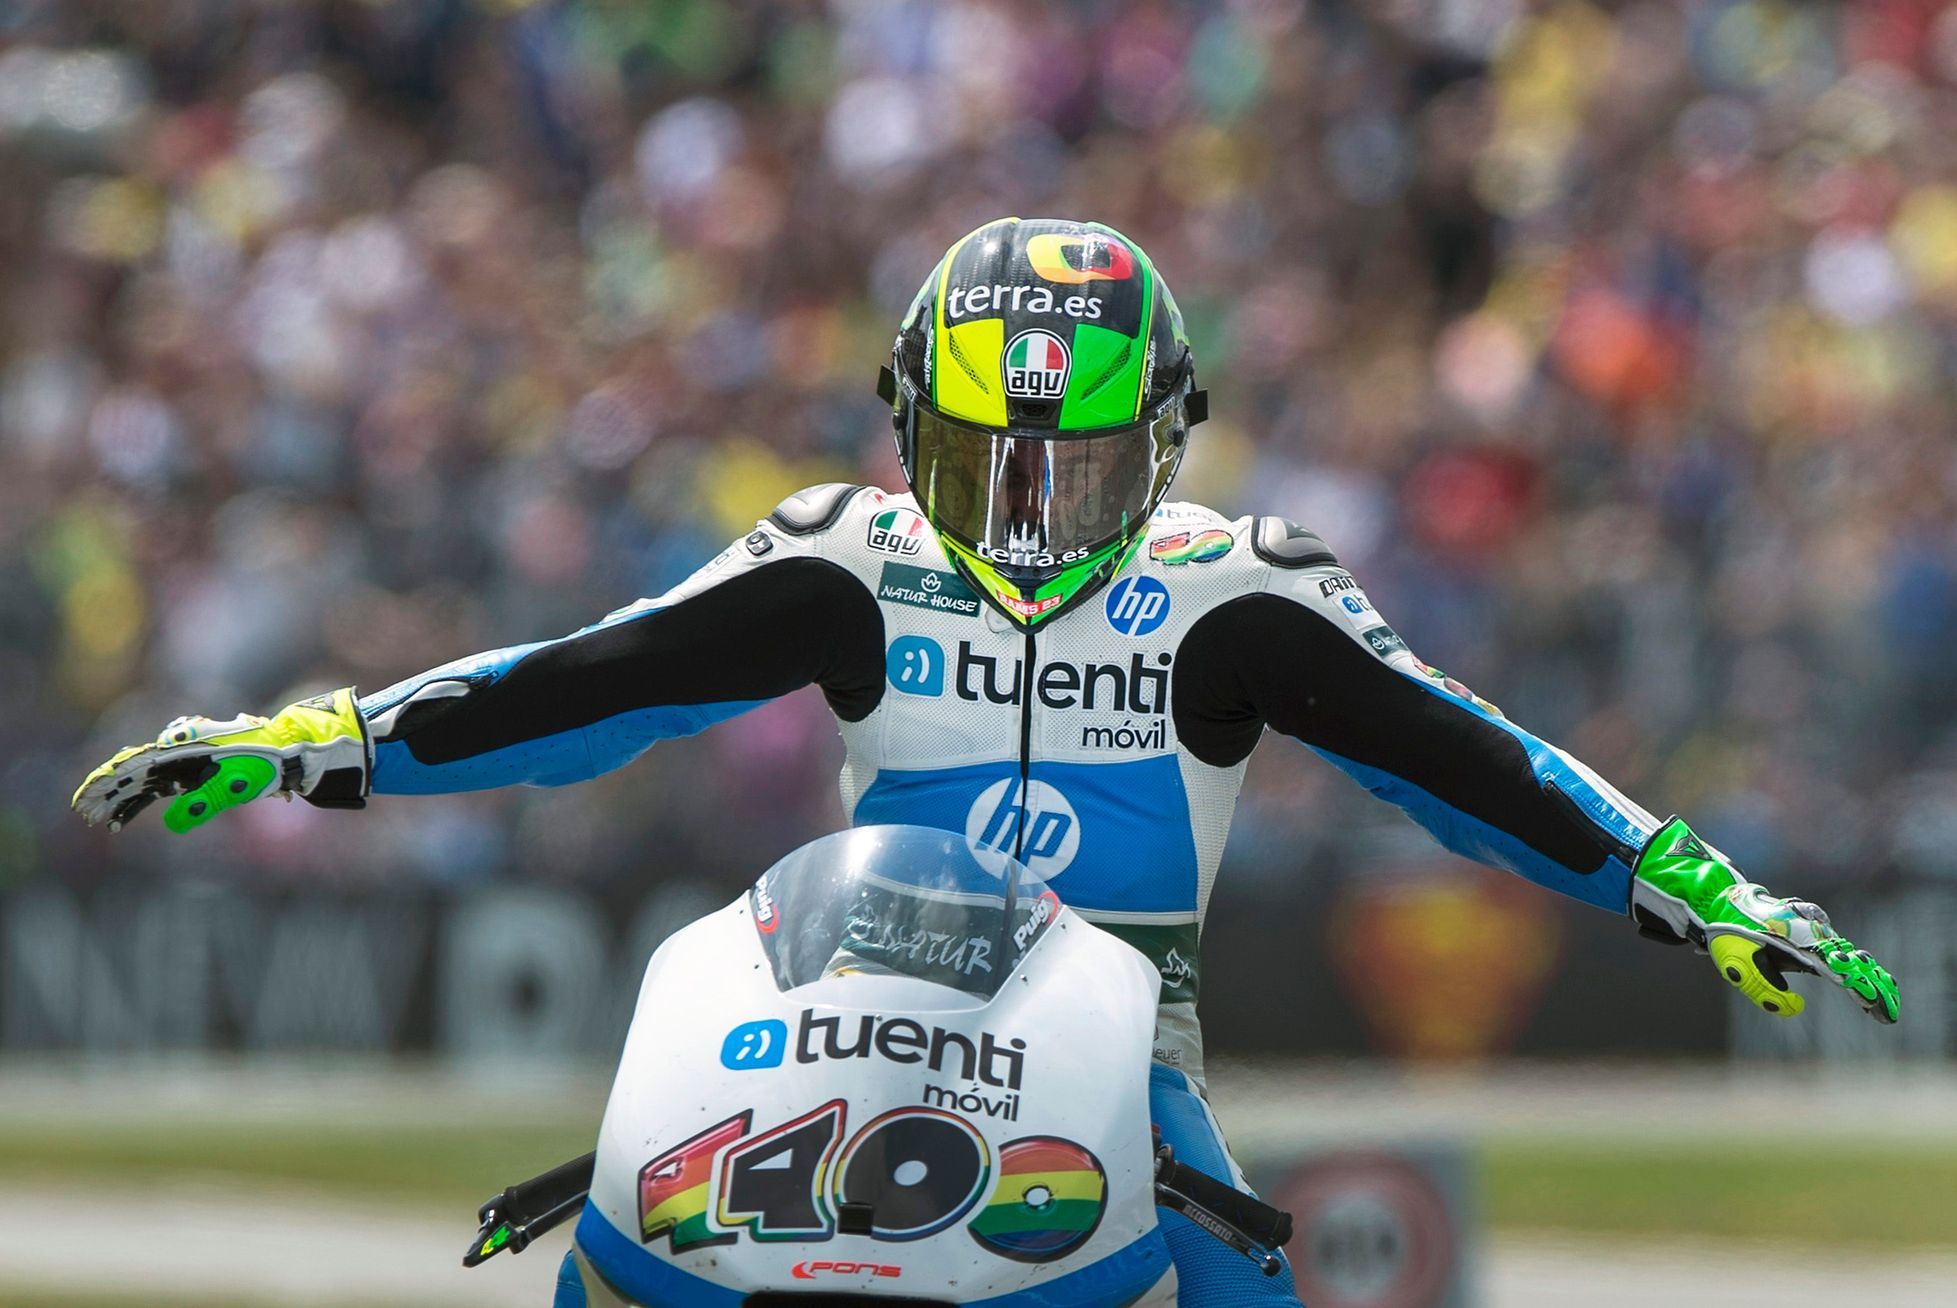 Kalex Moto2 rider Espargaro of Spain celebrates after winnin